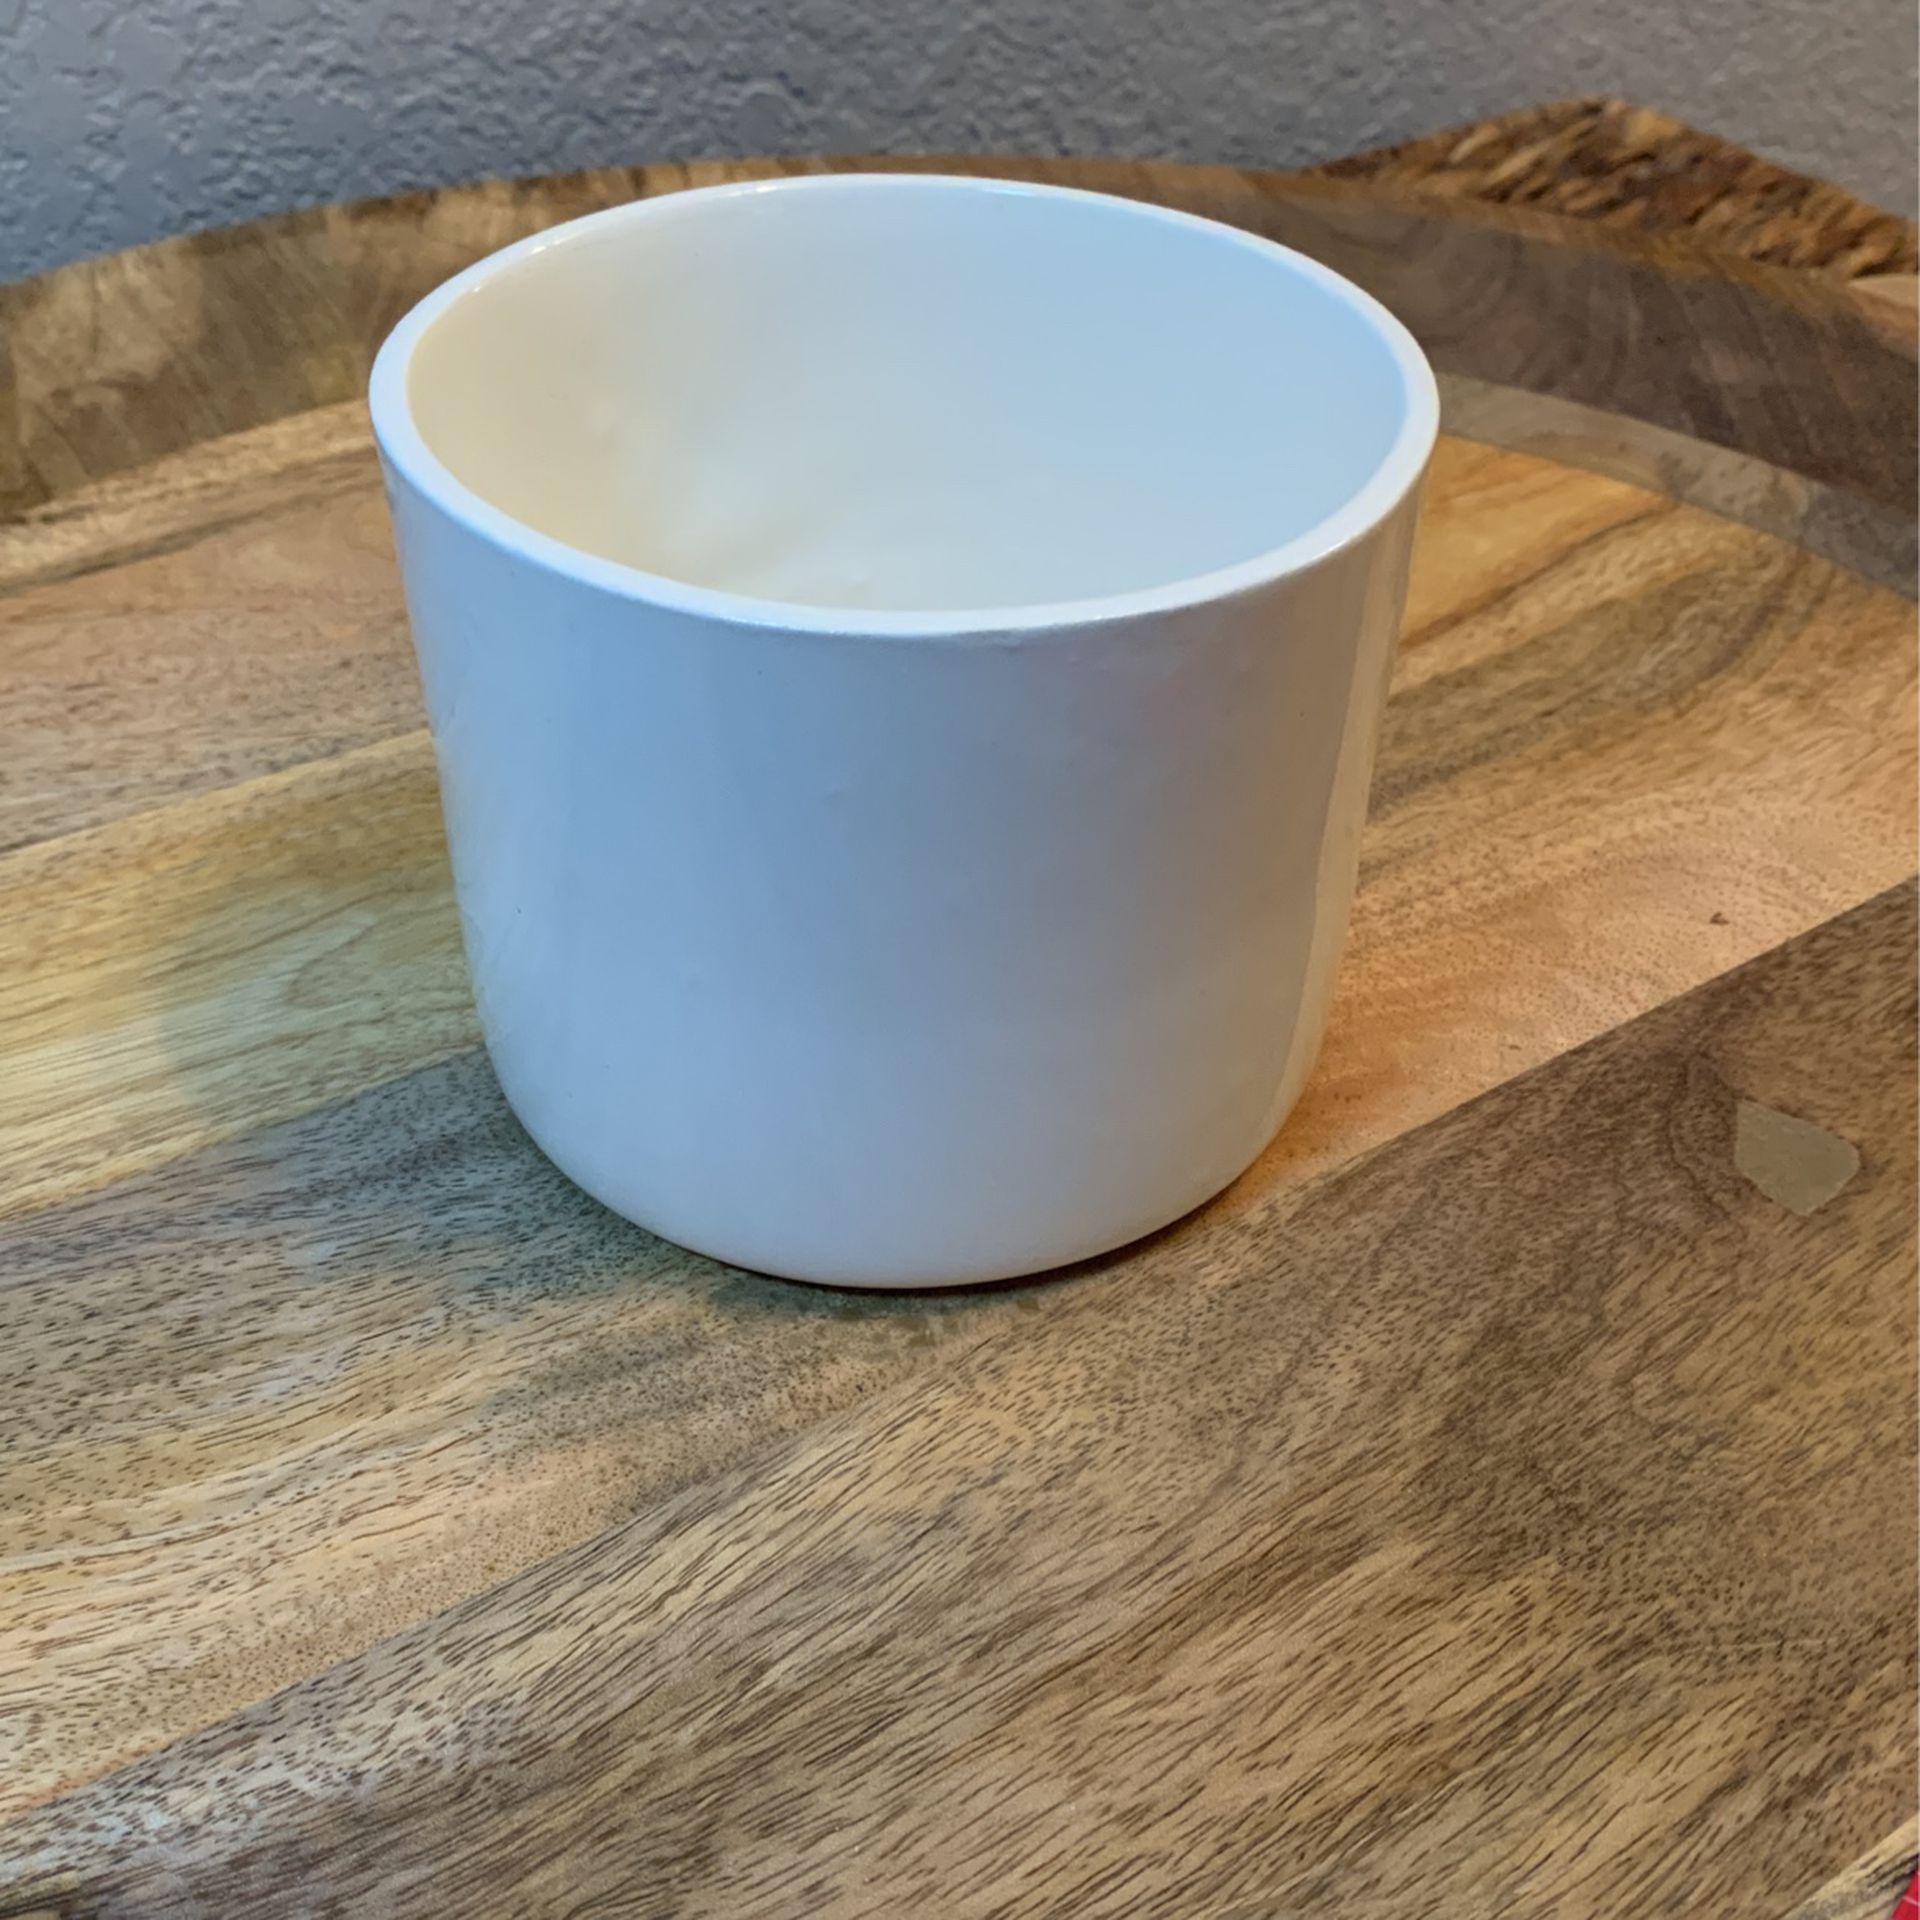 New Ceramic Planter